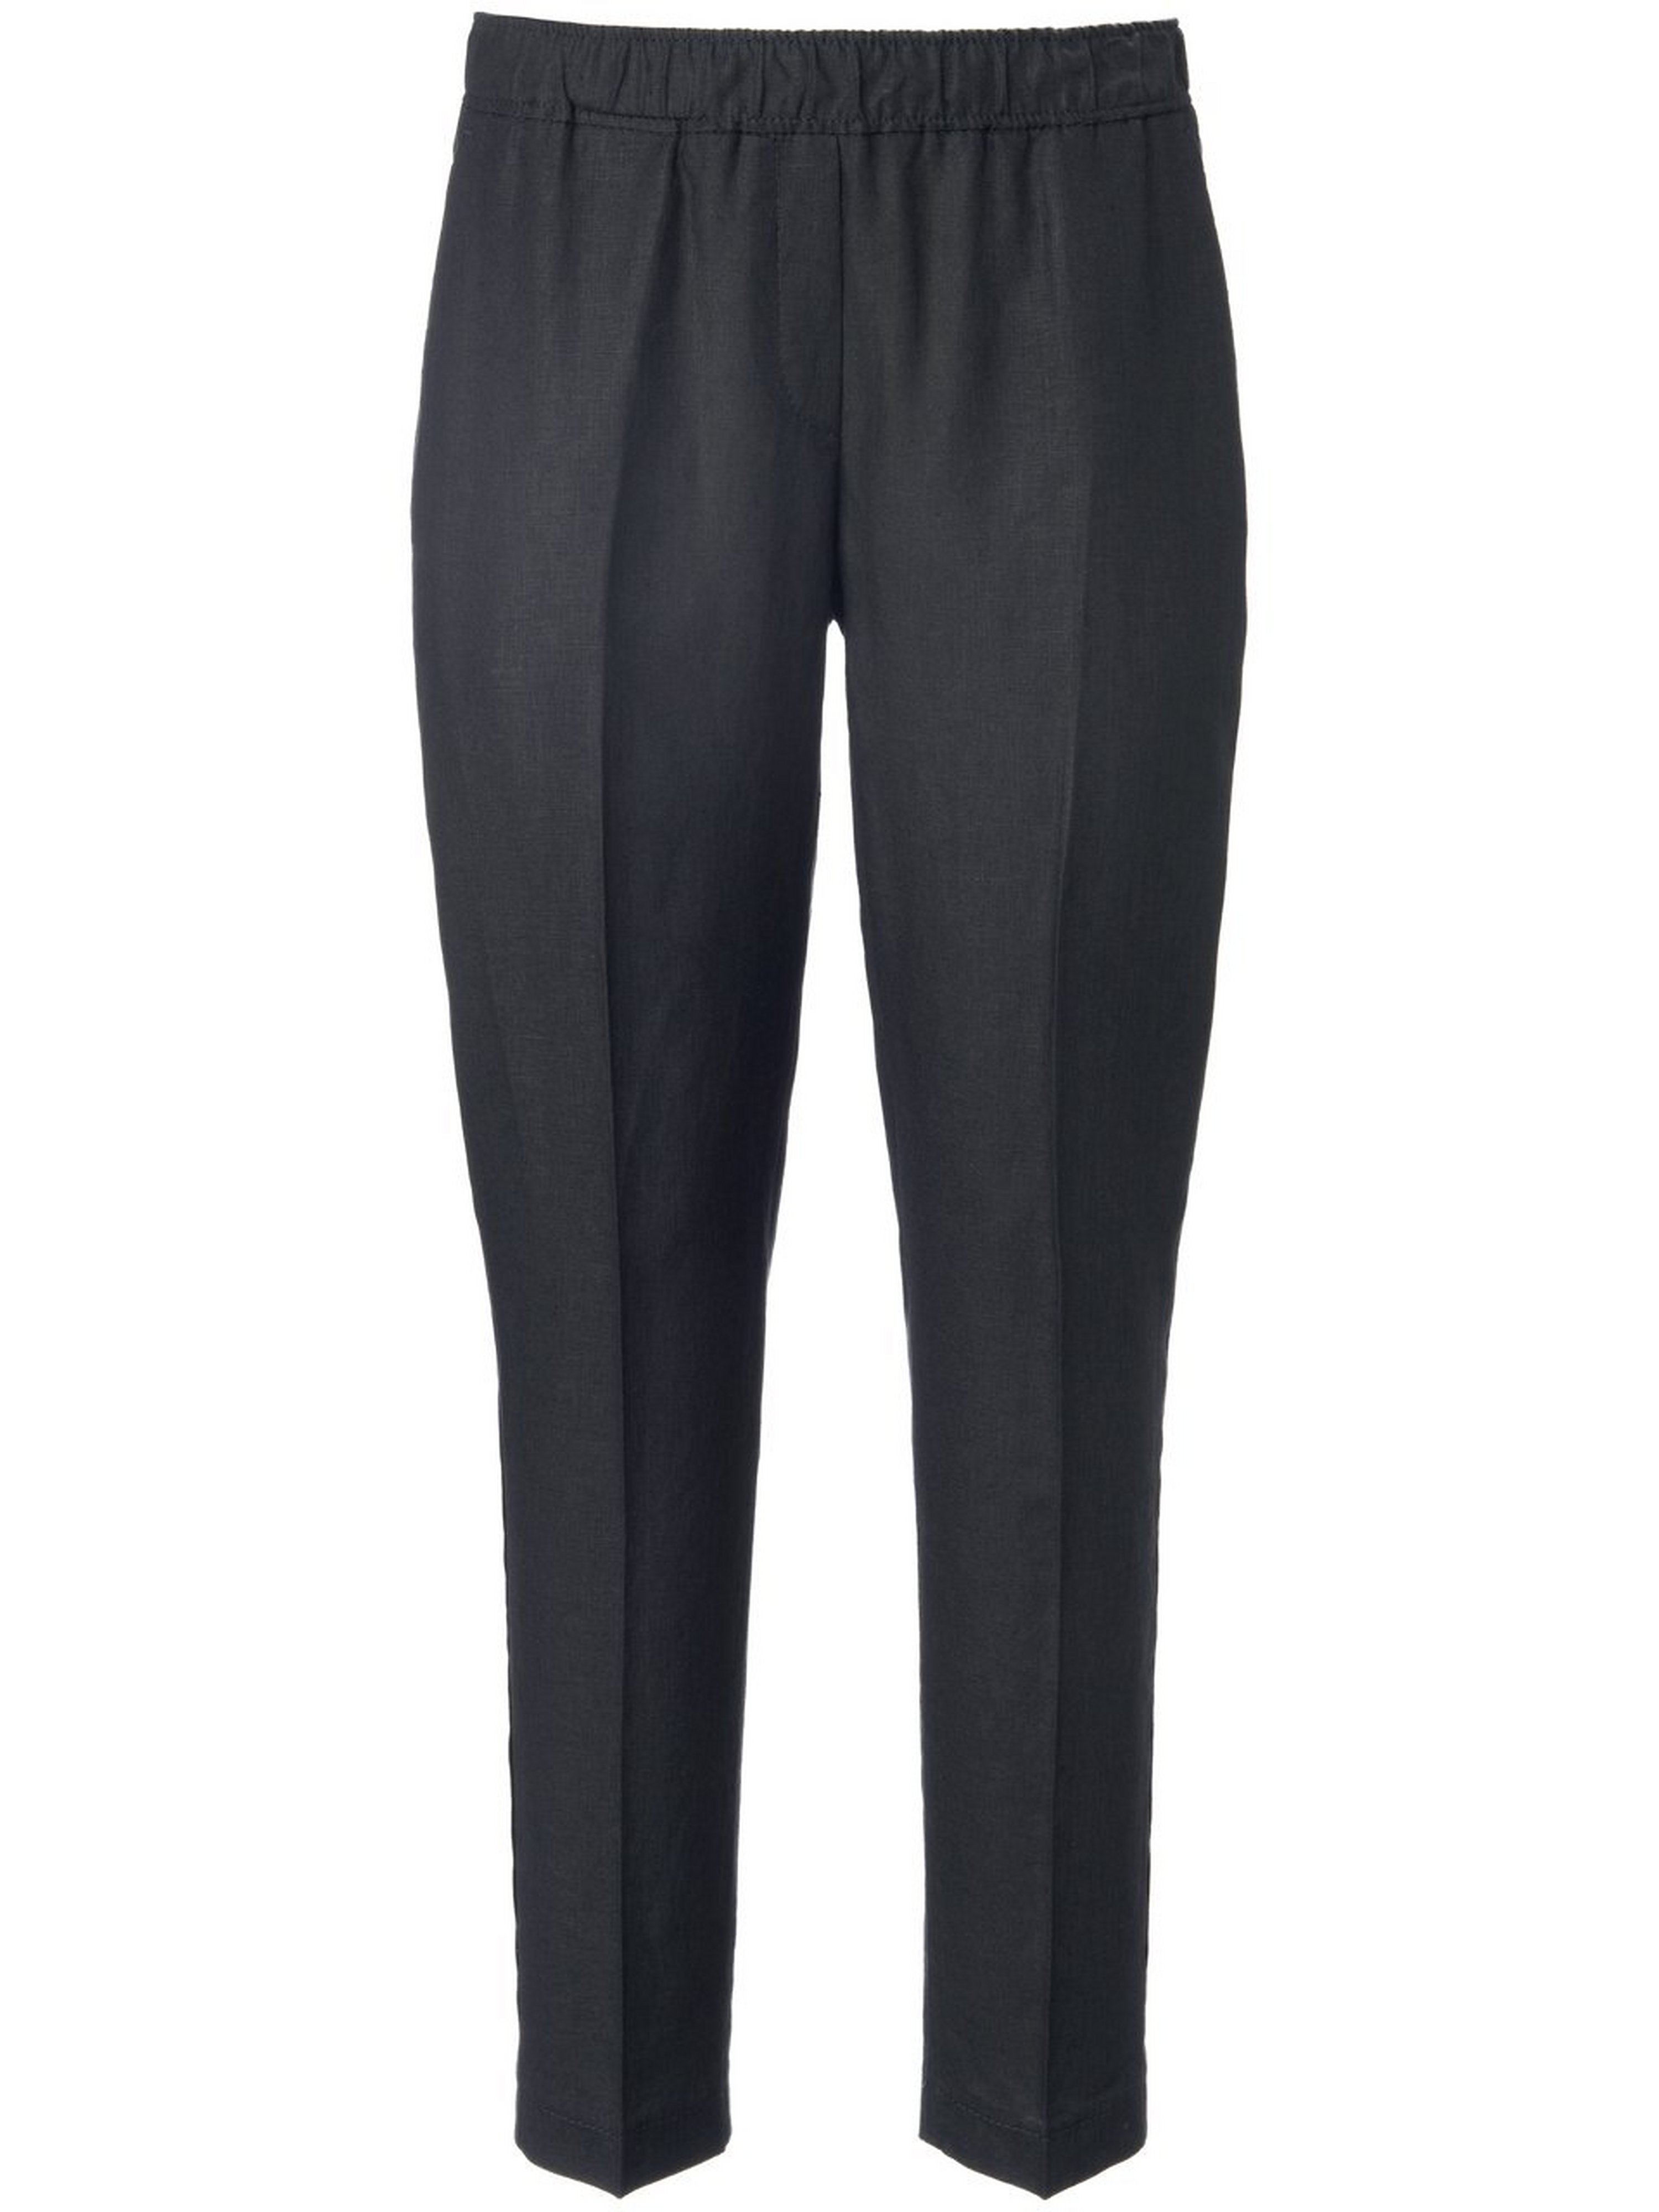 Le pantalon modern fit model Maron  Brax Feel Good noir